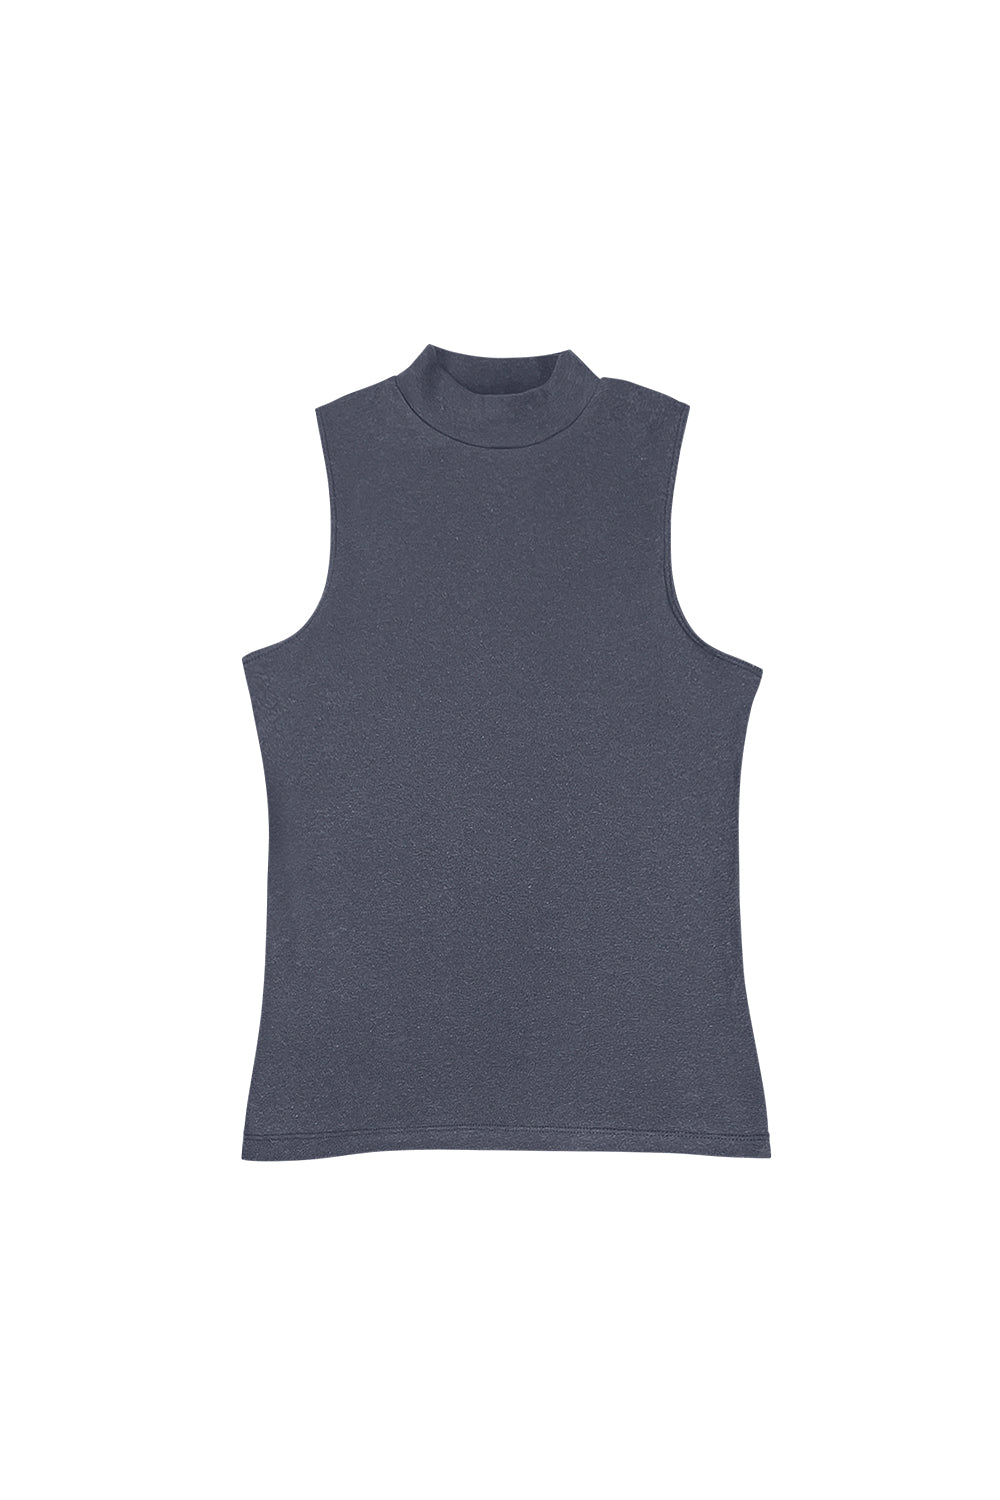 Mariposa Mock Shirt | Jungmaven Hemp Clothing & Accessories / Color: Diesel Gray